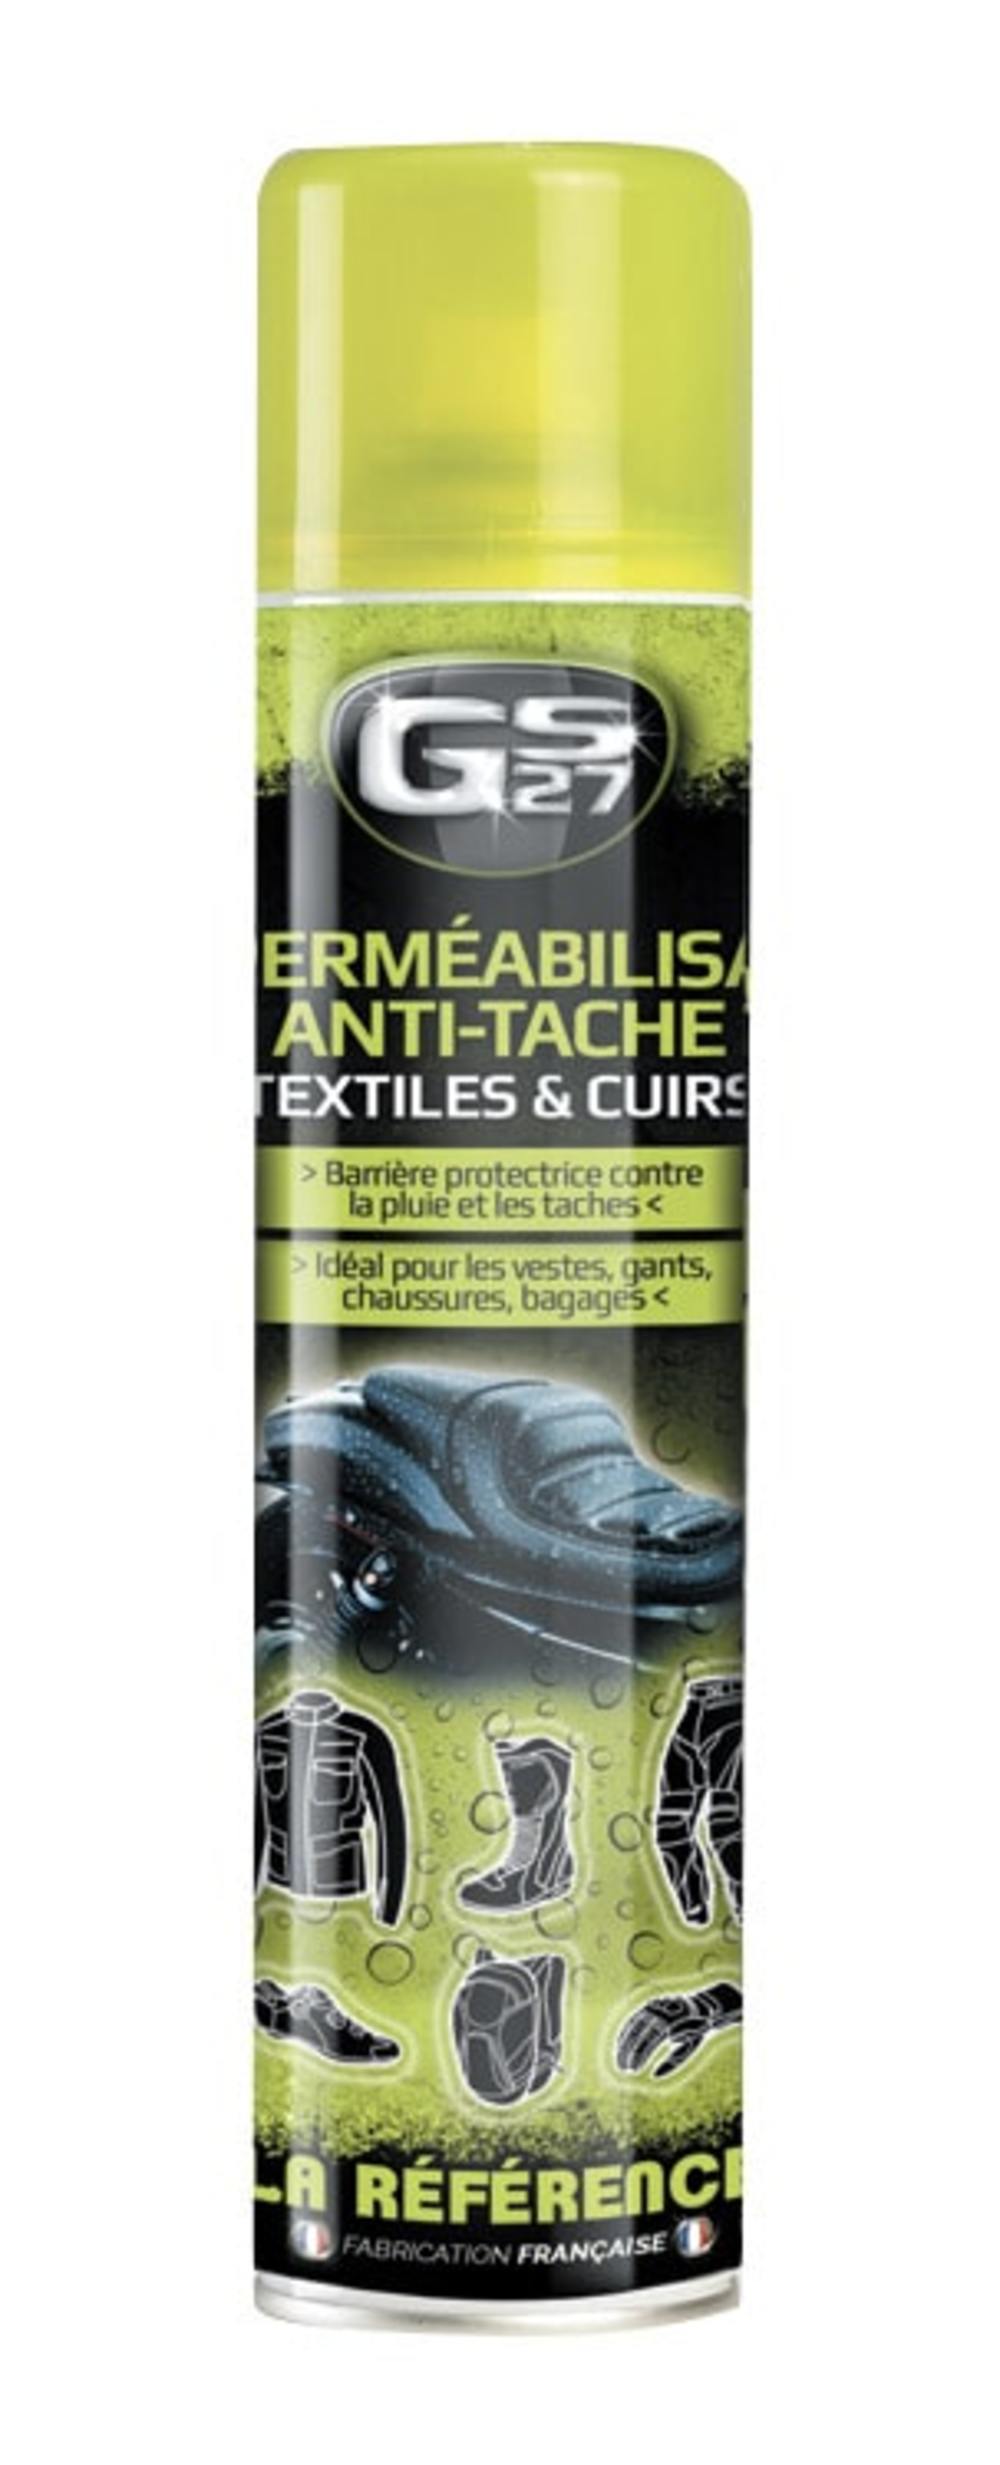 GS27 - Impermeabilisant anti-tache textiles et cuirs 500ml - MO110132